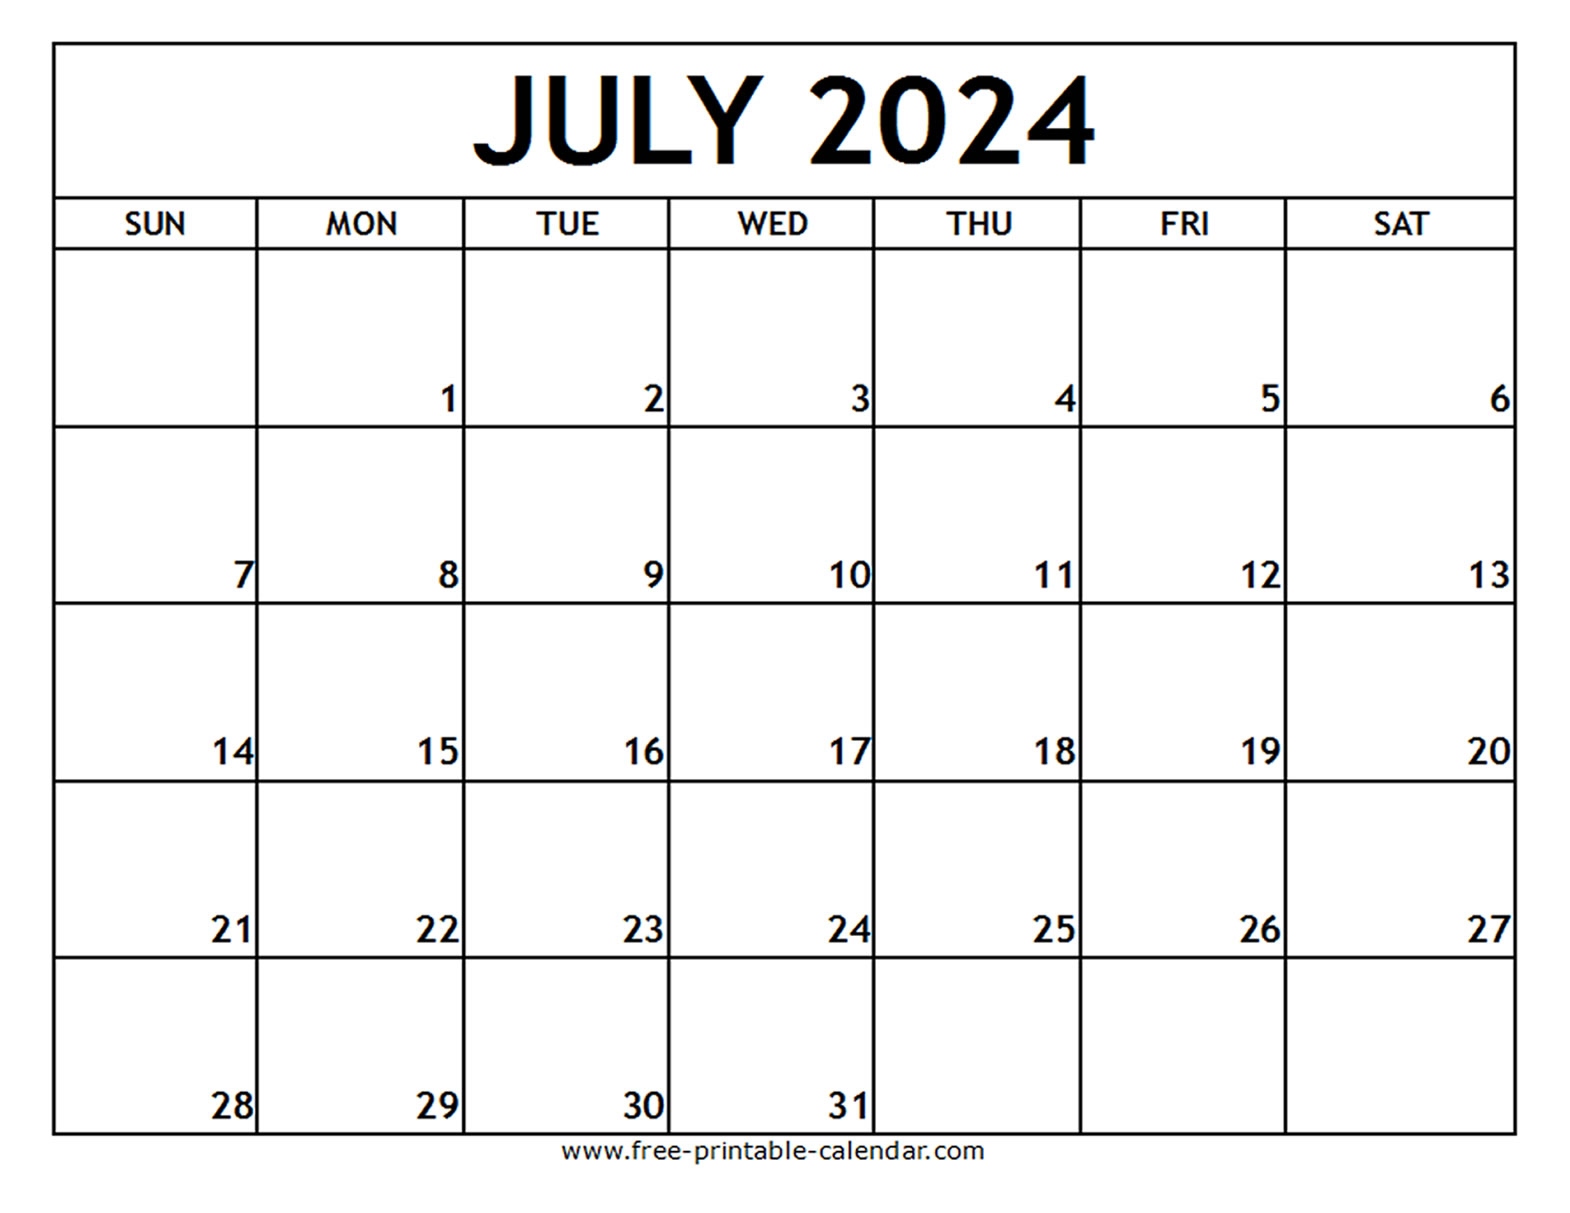 July 2024 Printable Calendar - Free-Printable-Calendar regarding Free Printable Blank July 2024 Calendar